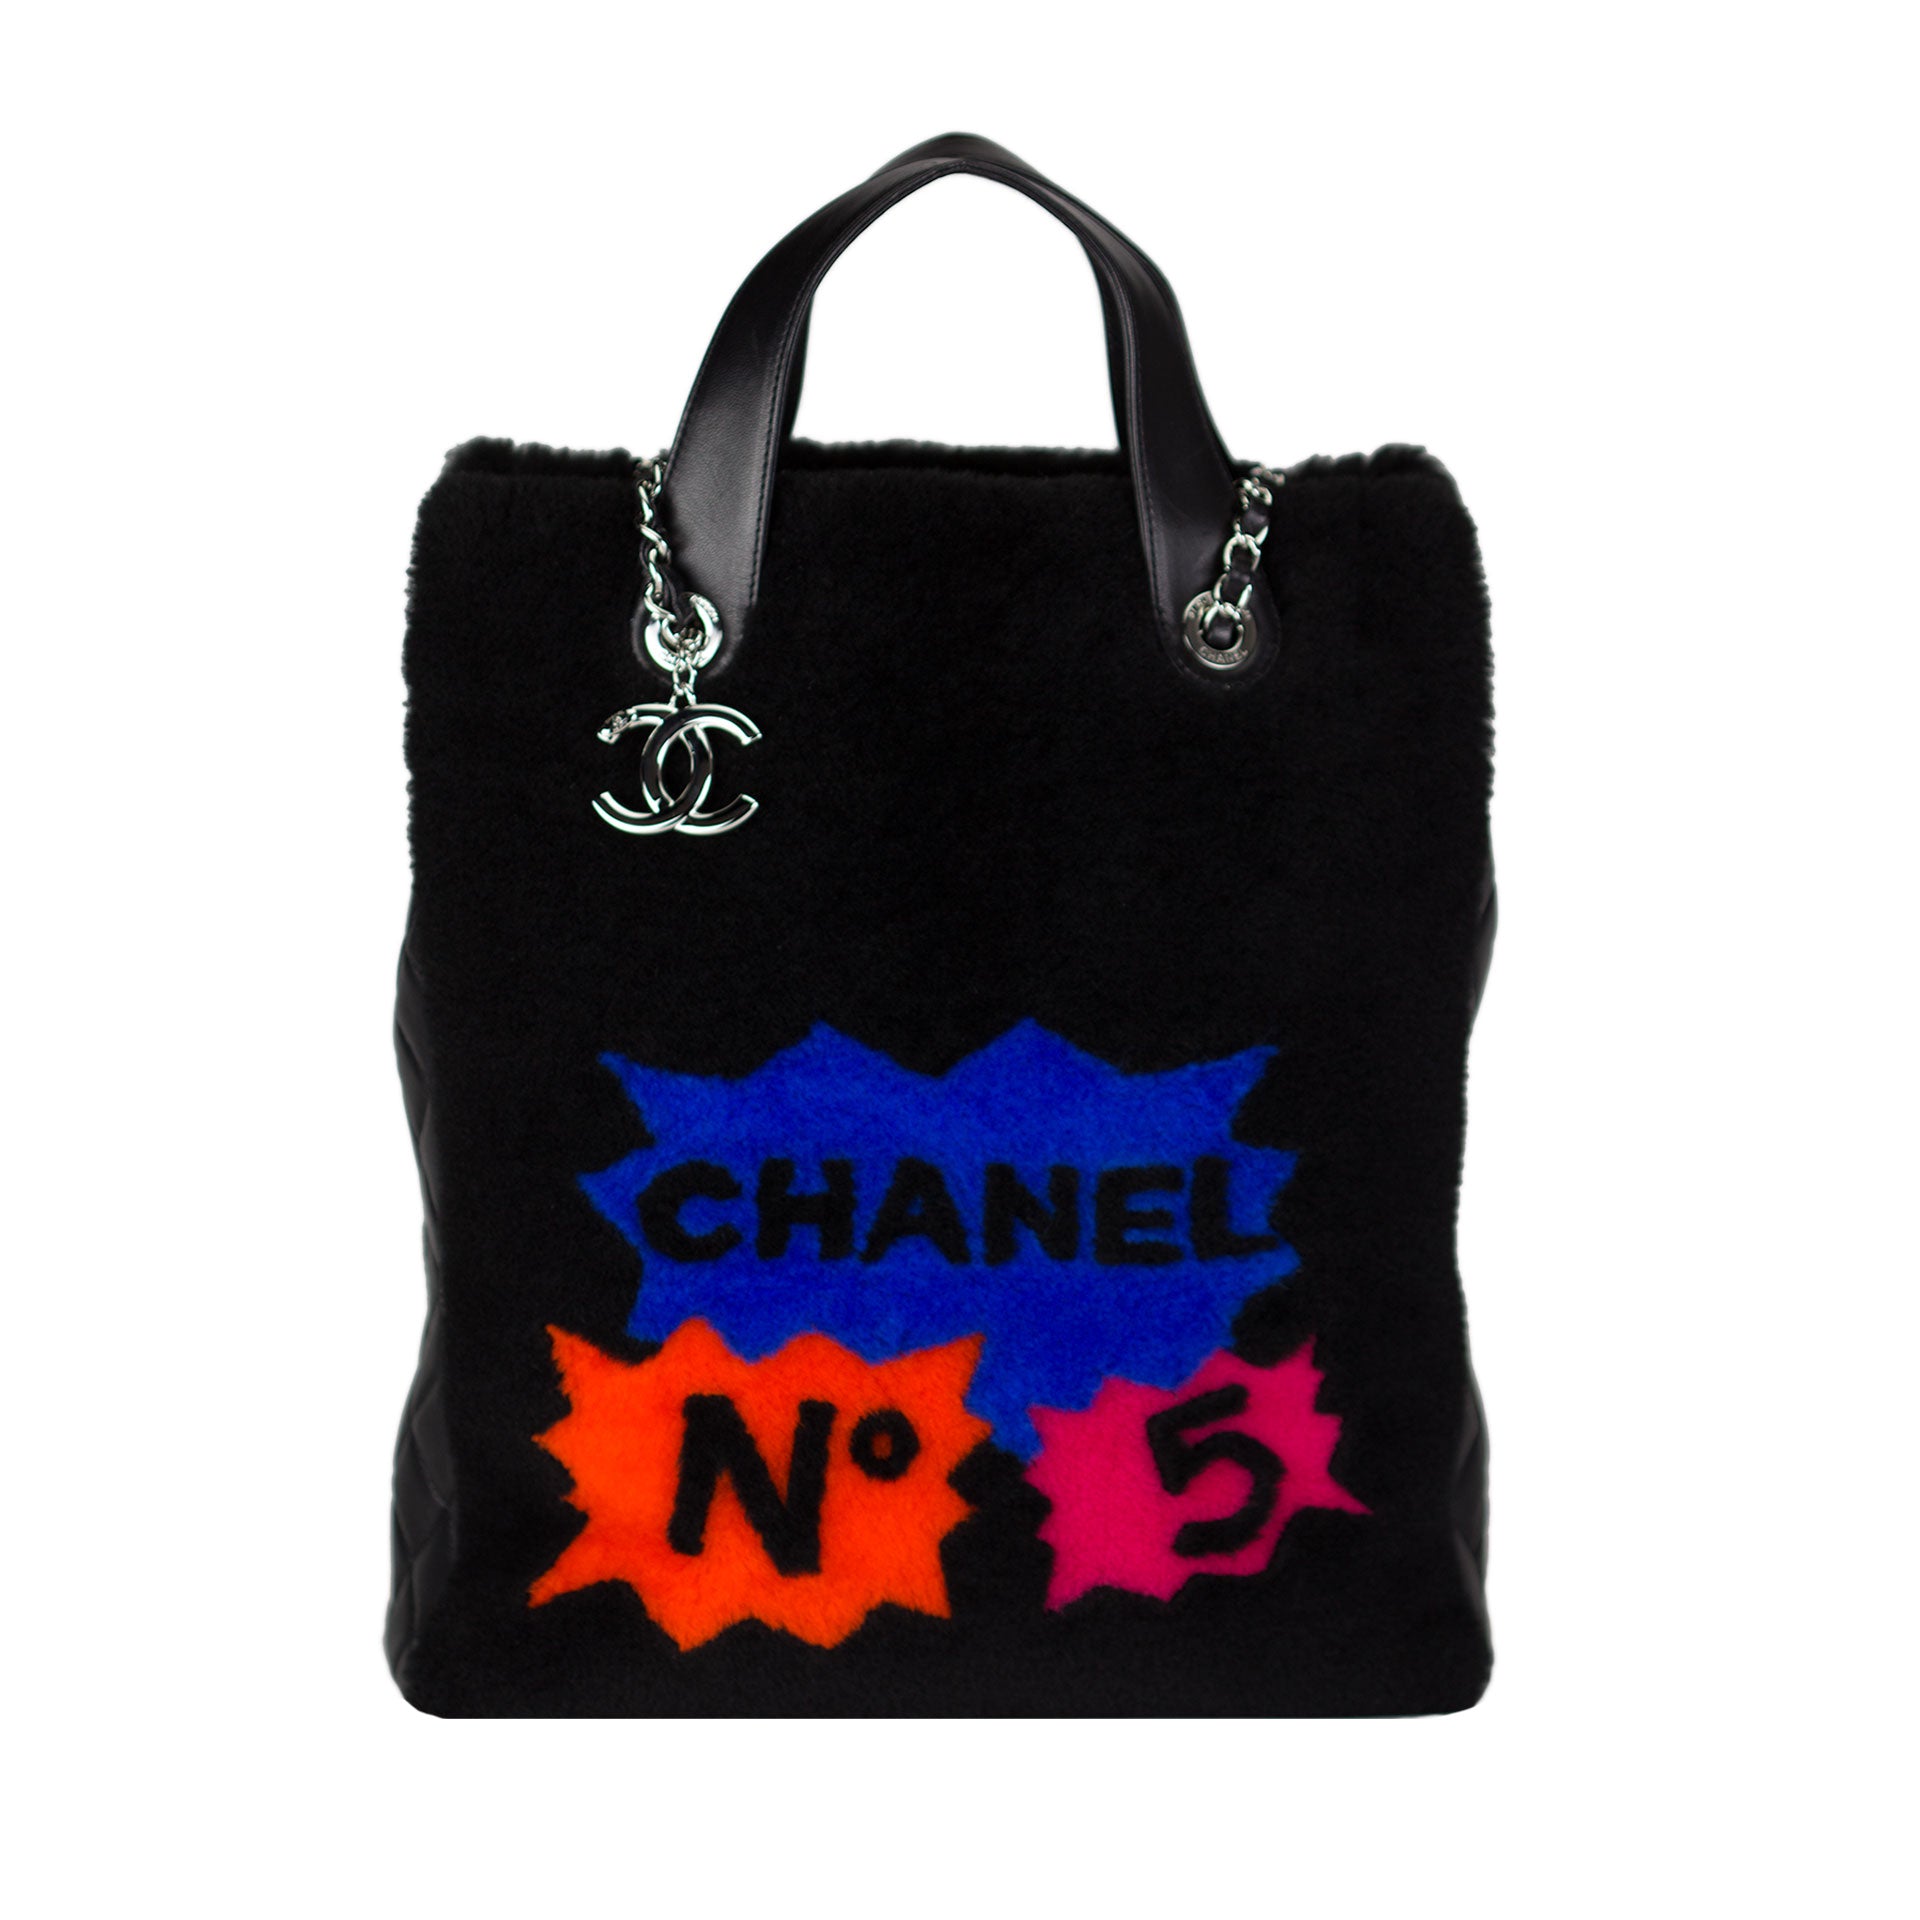 chanel n5 bag